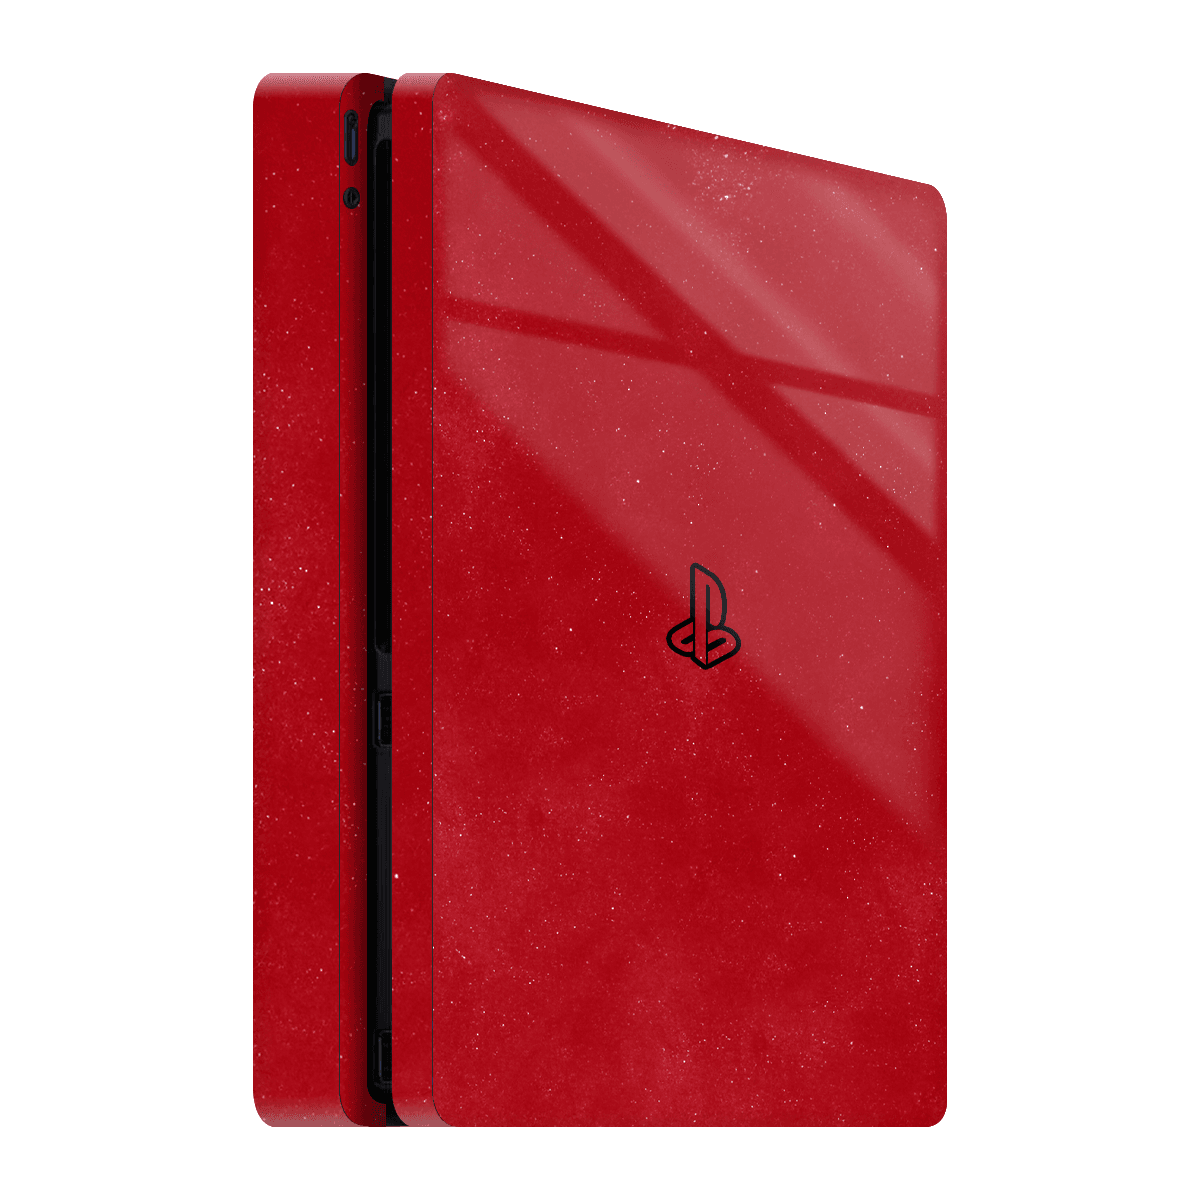 PlayStation 4 Slim Kaplama Vişne Kırmızısı